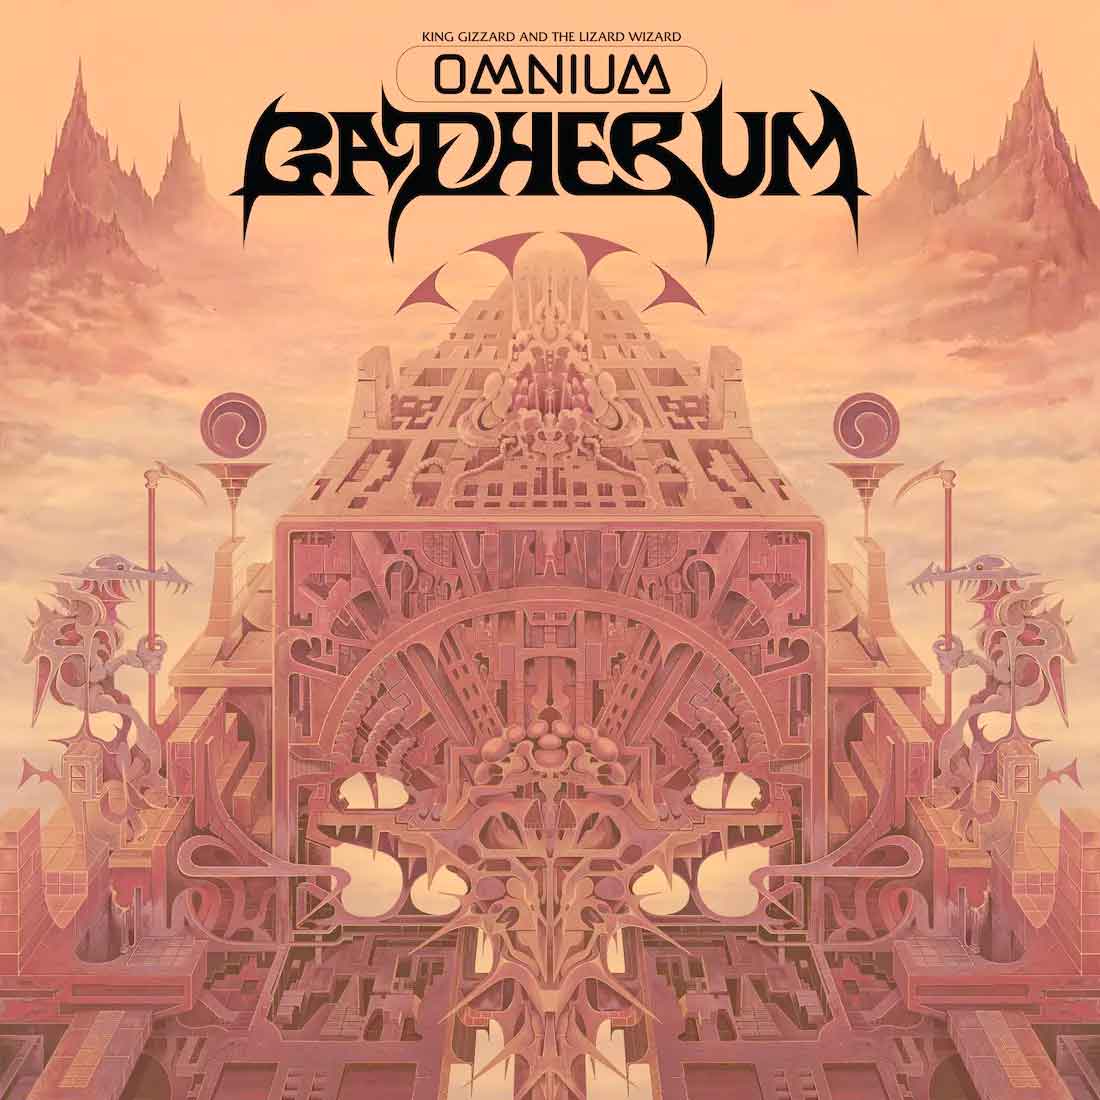 Tapa de Omnium Gatherum, disco de King Gizzard & the Lizard Wizard